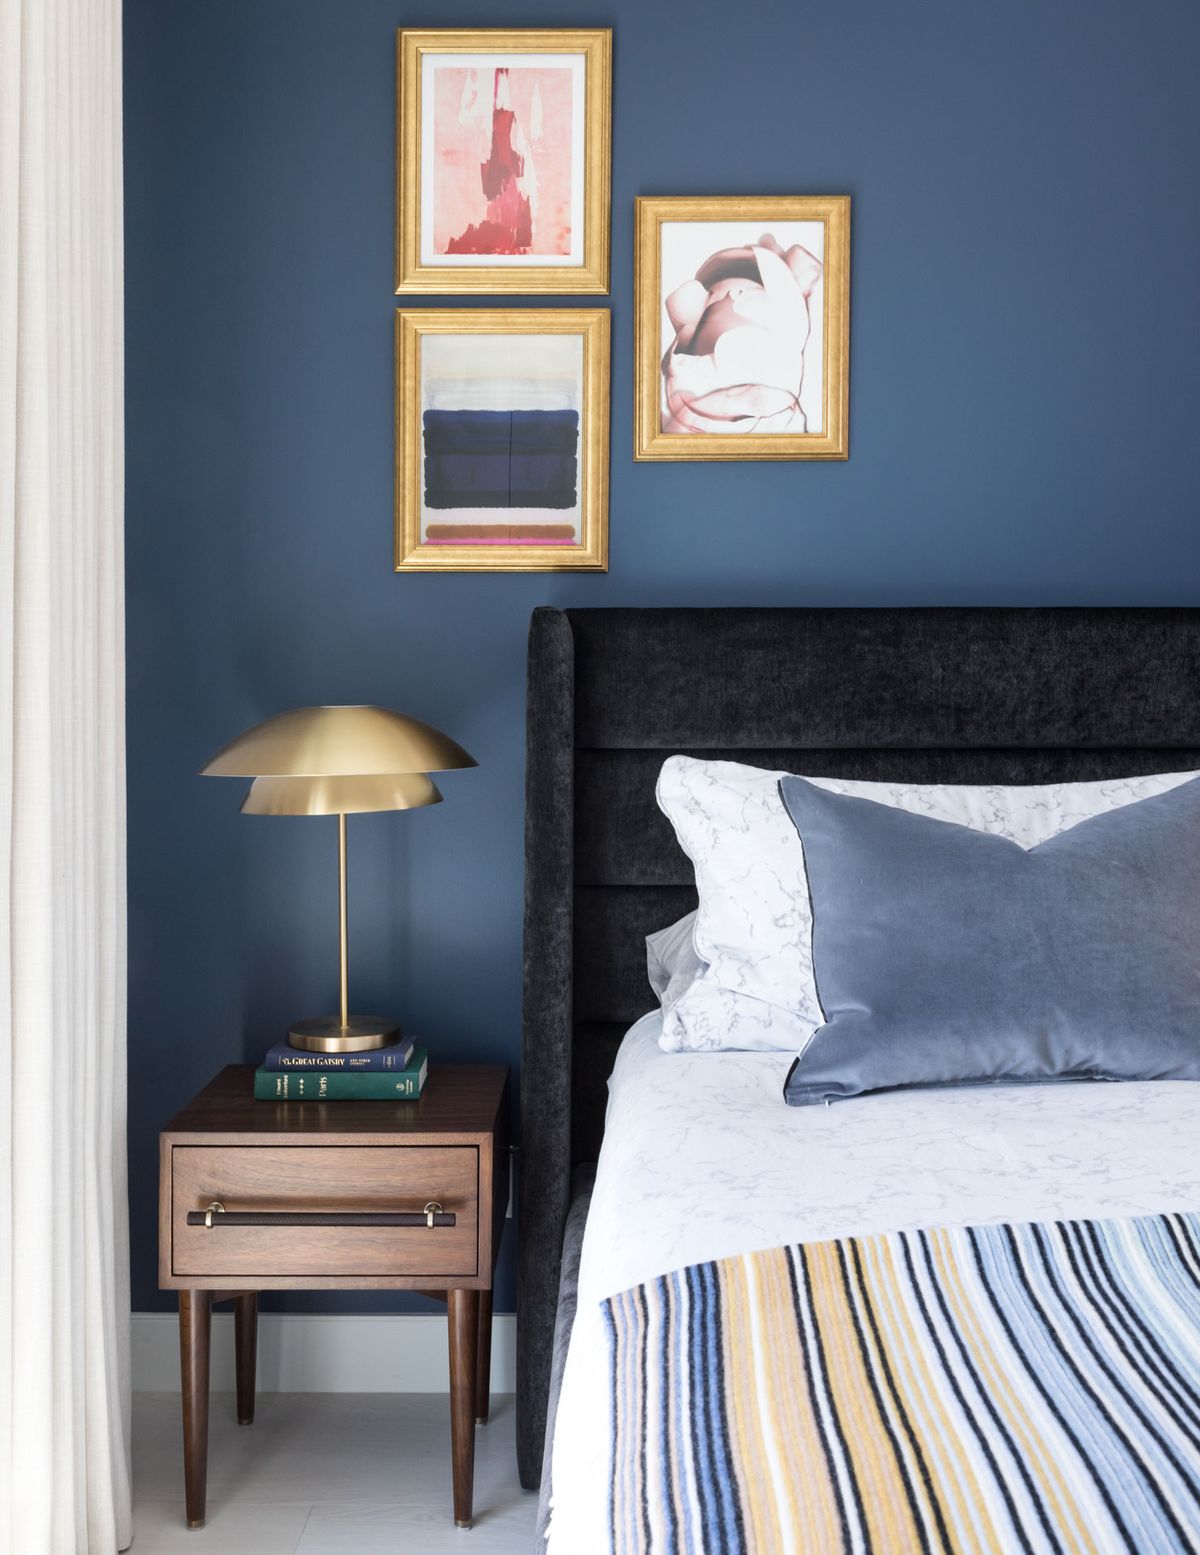 5 styling tips for bedrooms – from designer Gillian Segal